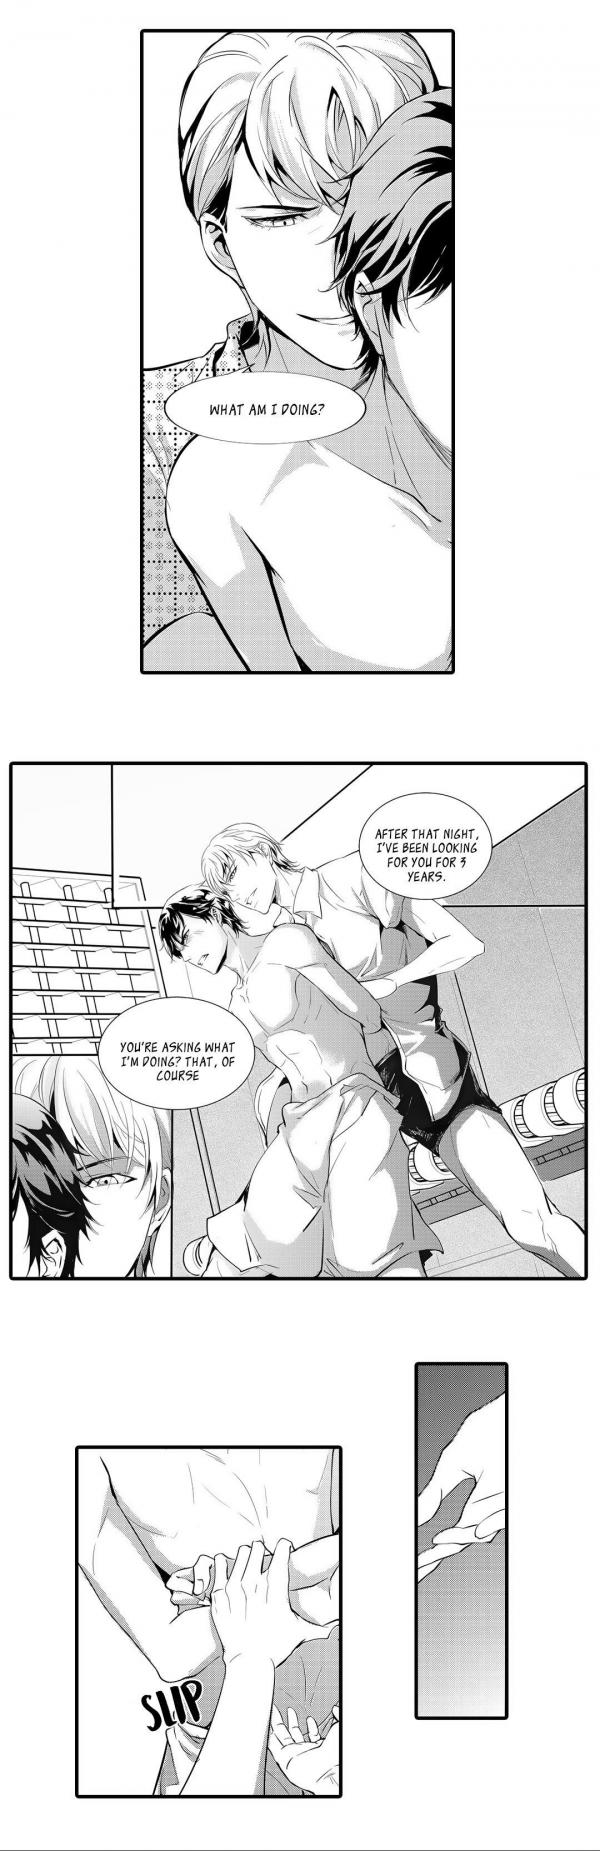 Bl spanking manga